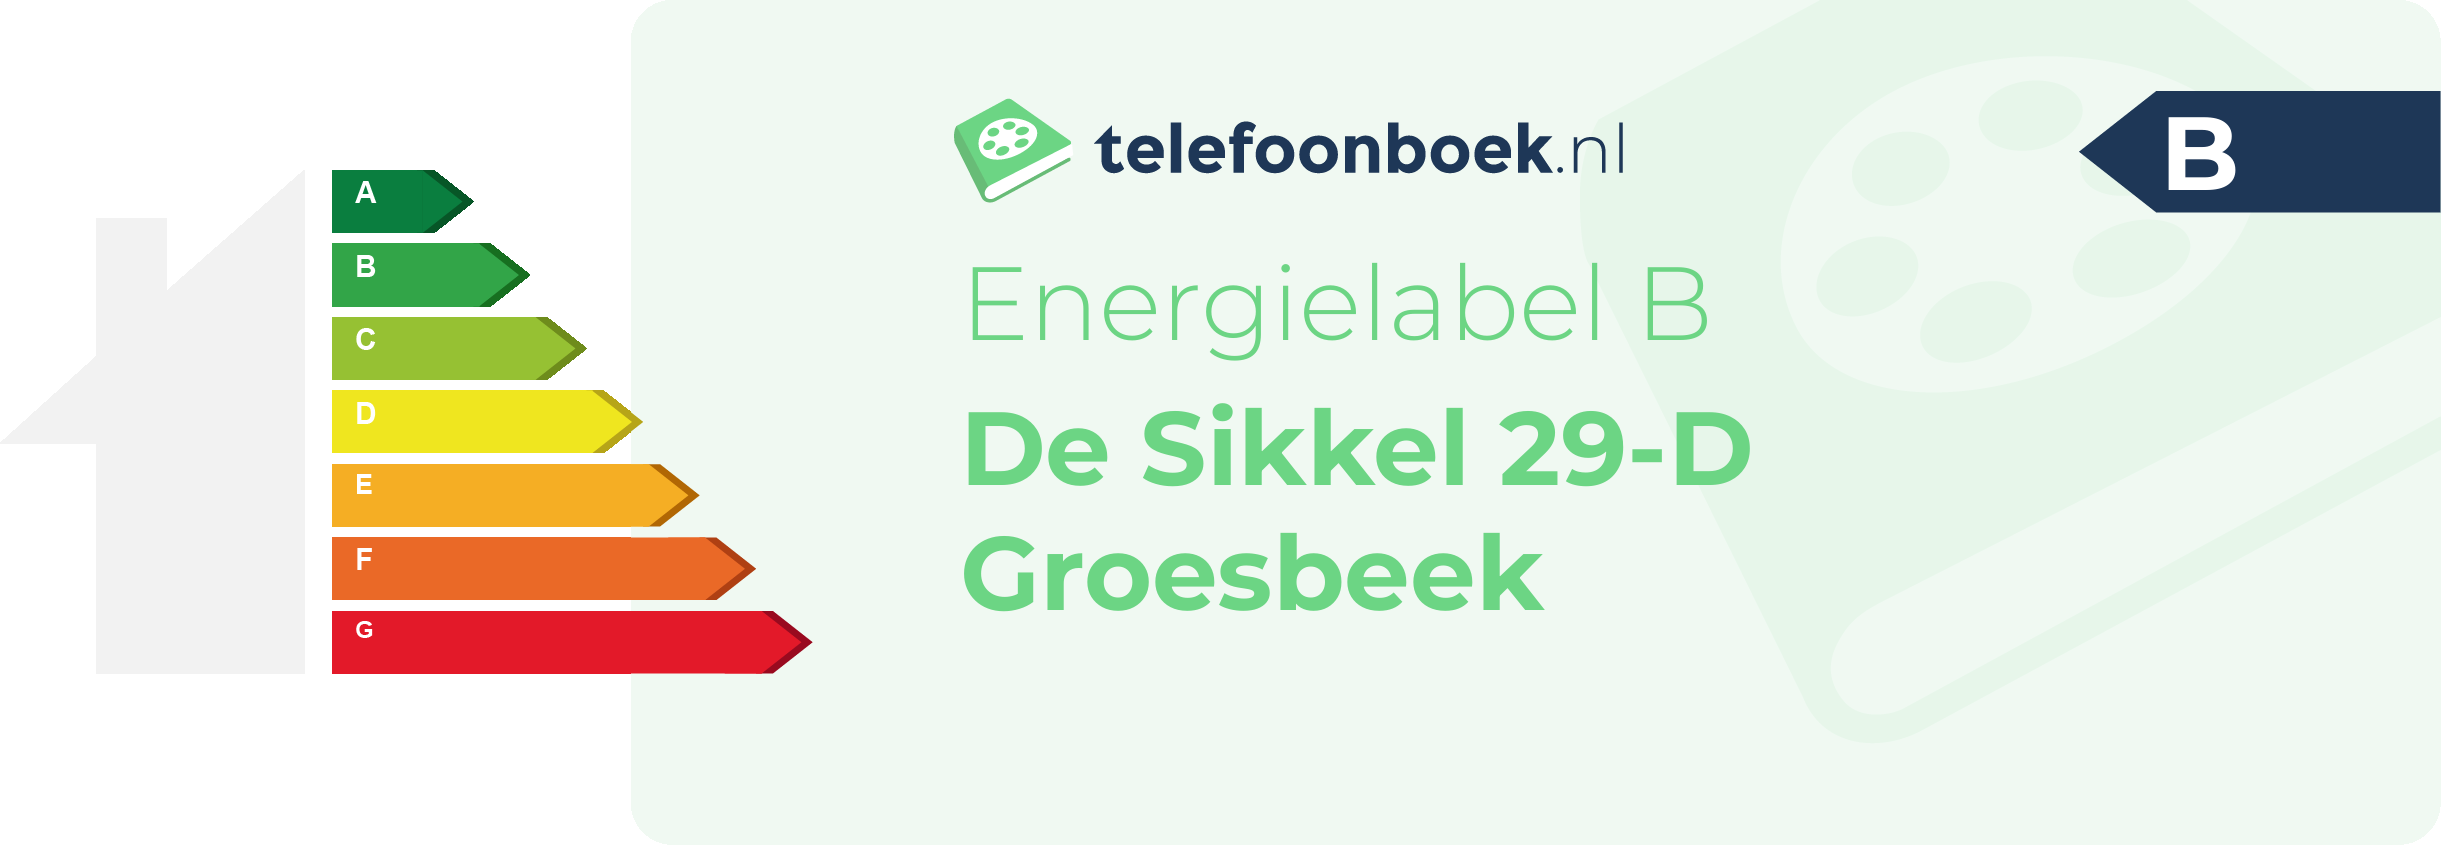 Energielabel De Sikkel 29-D Groesbeek